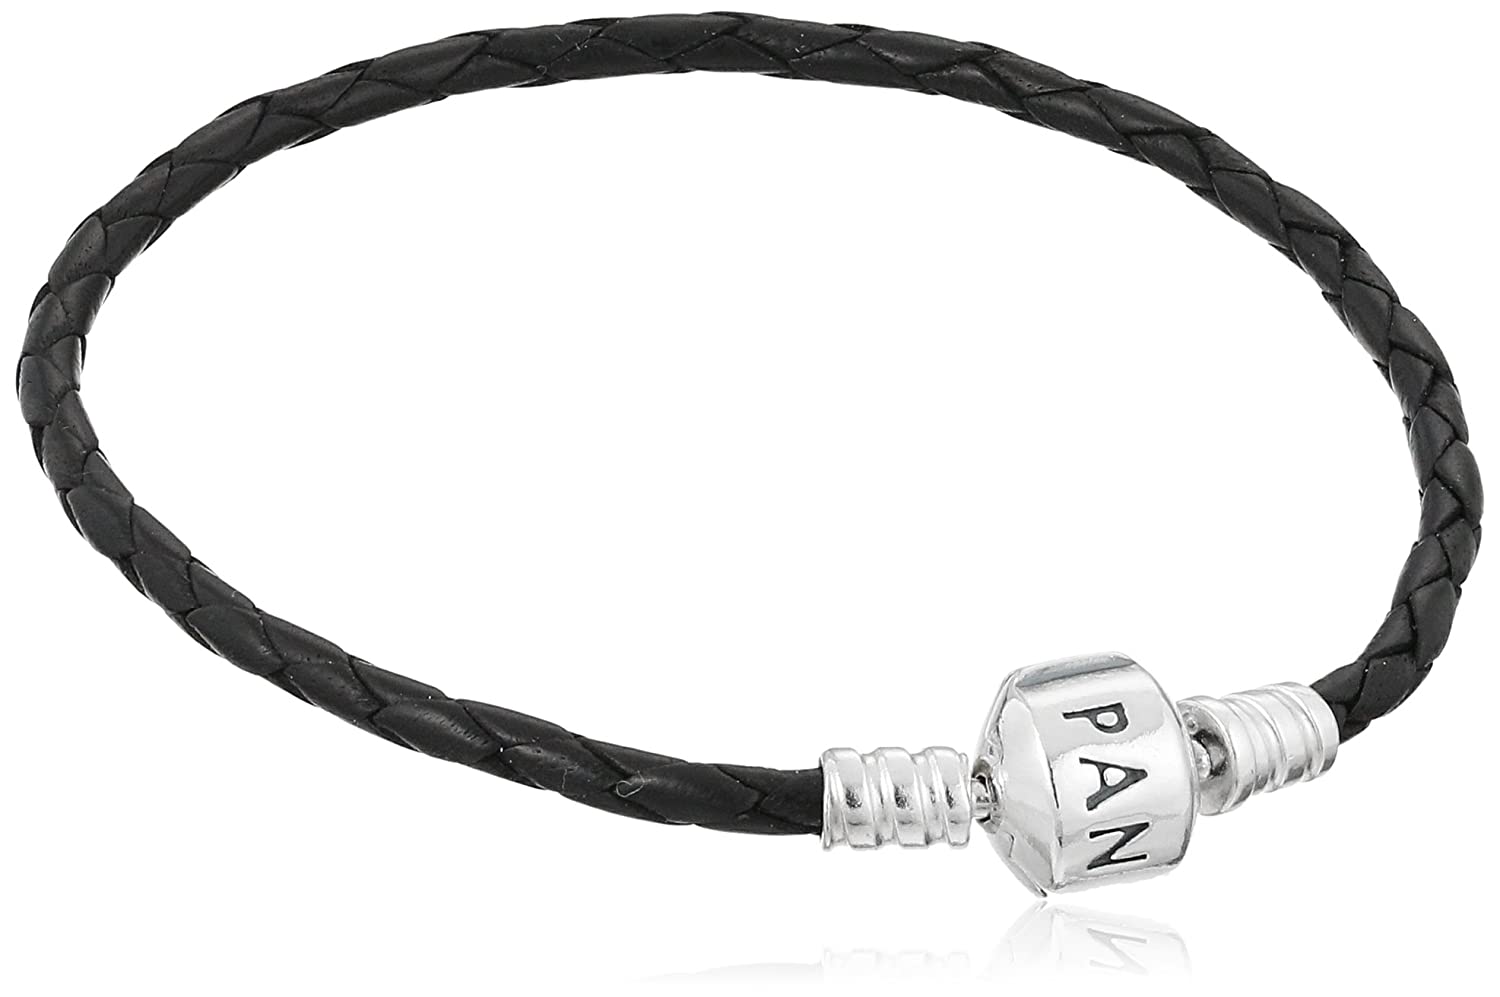 Pandora Moments Black Leather Bracelet #590705CBK-S2, 17.5cm